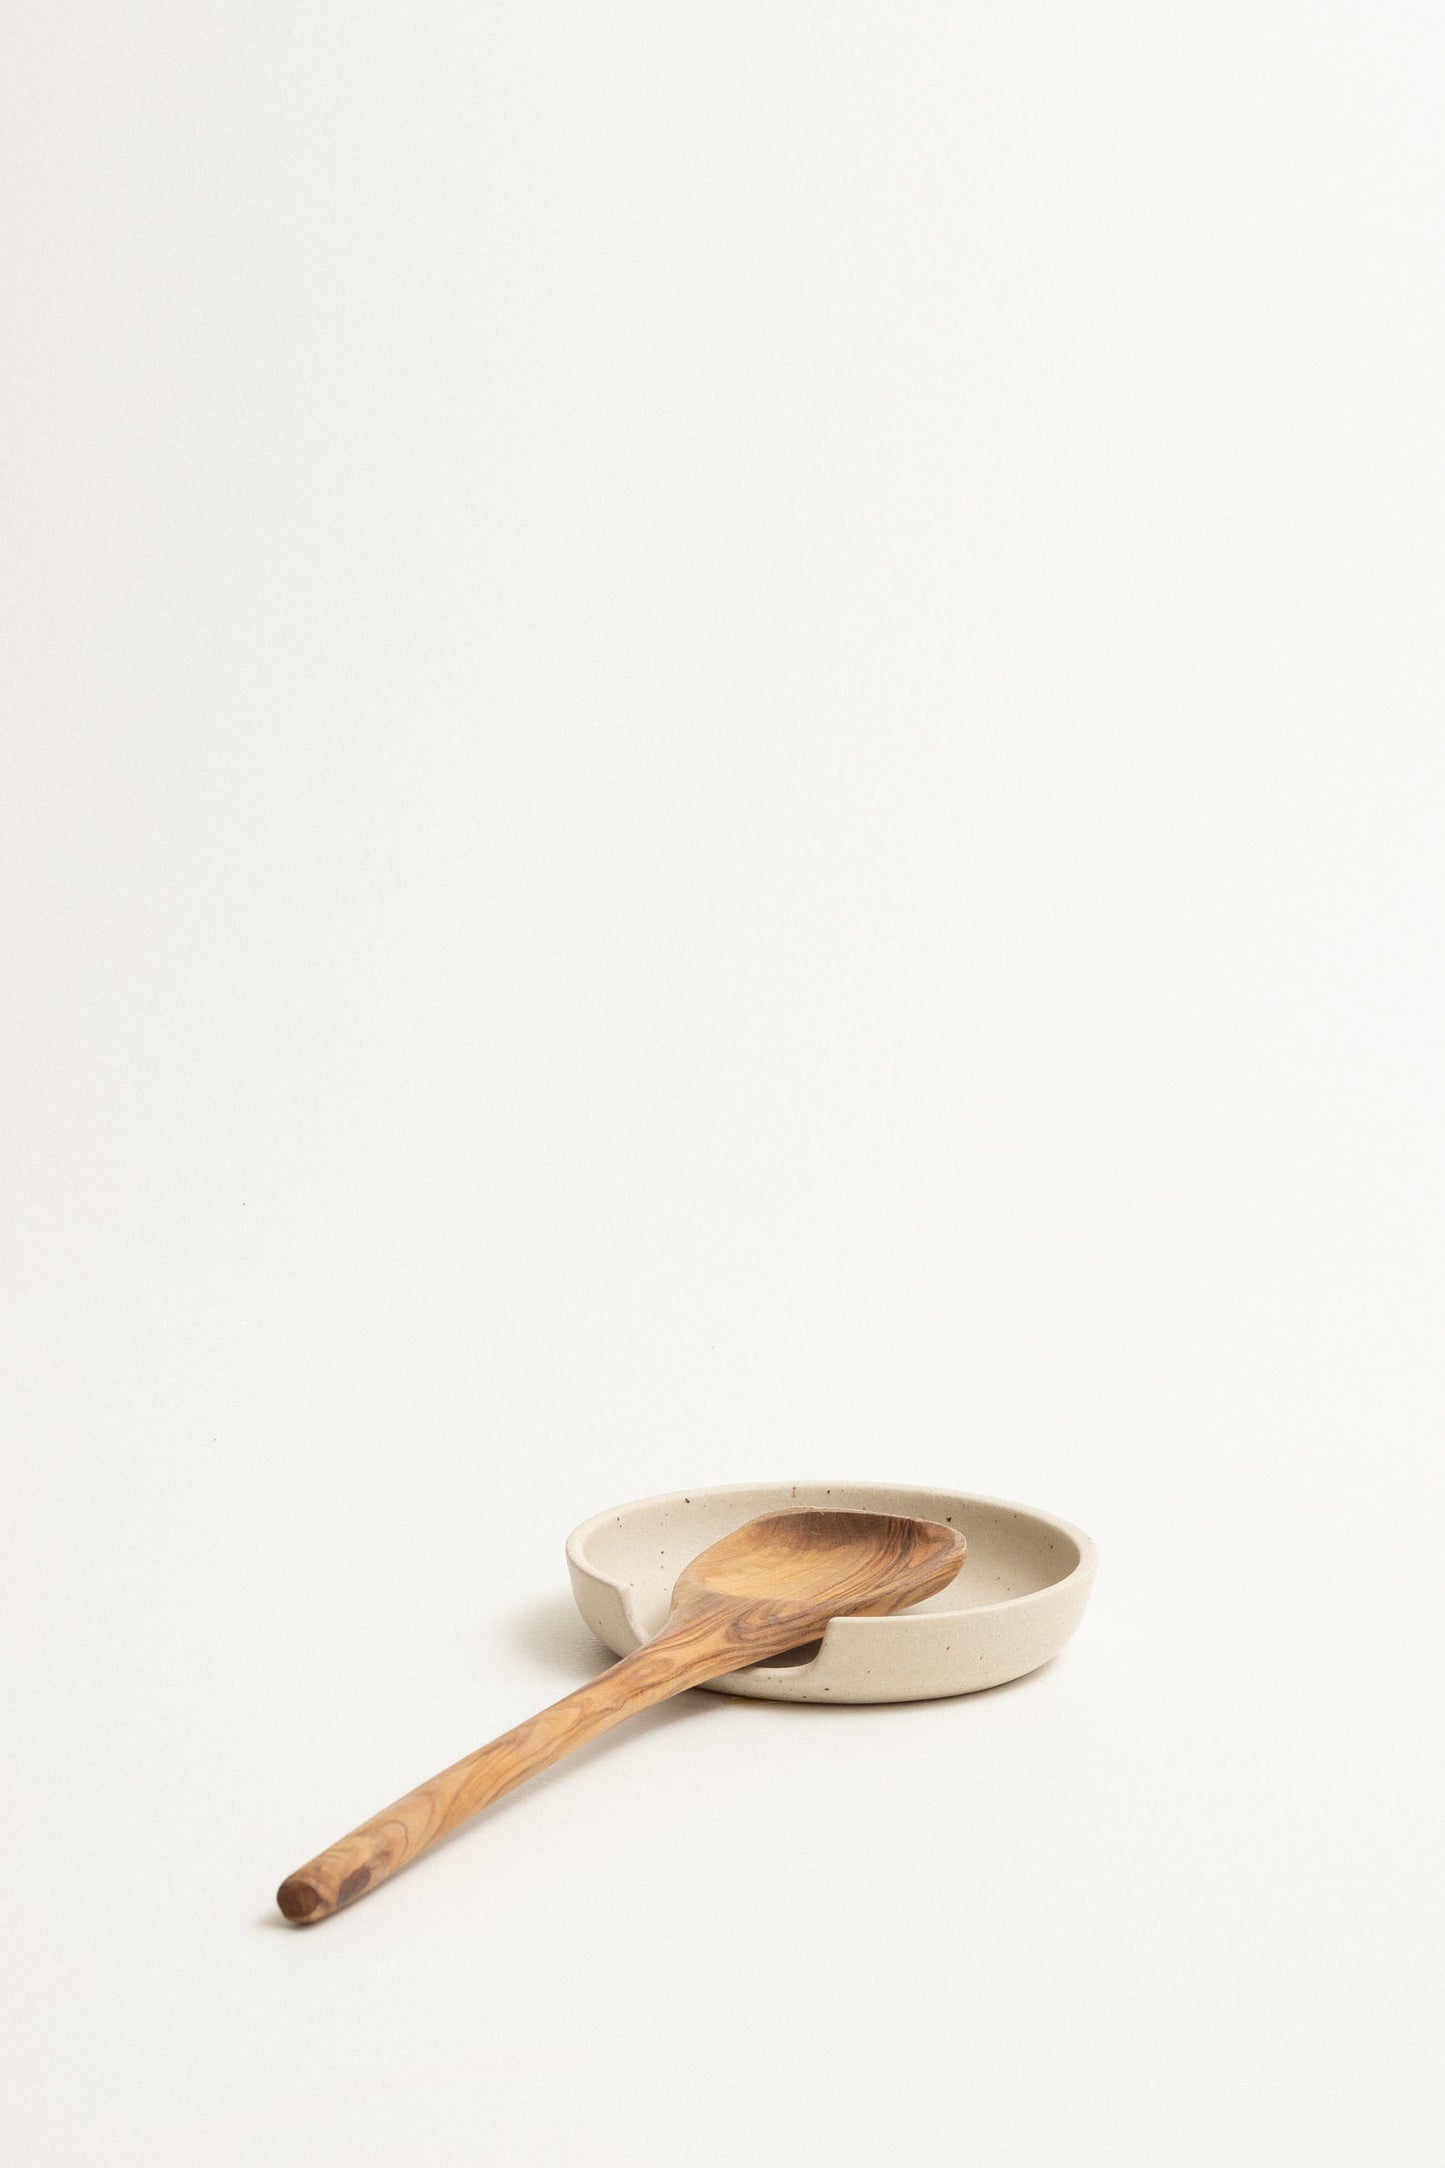 Spoon rest - Creamy beige